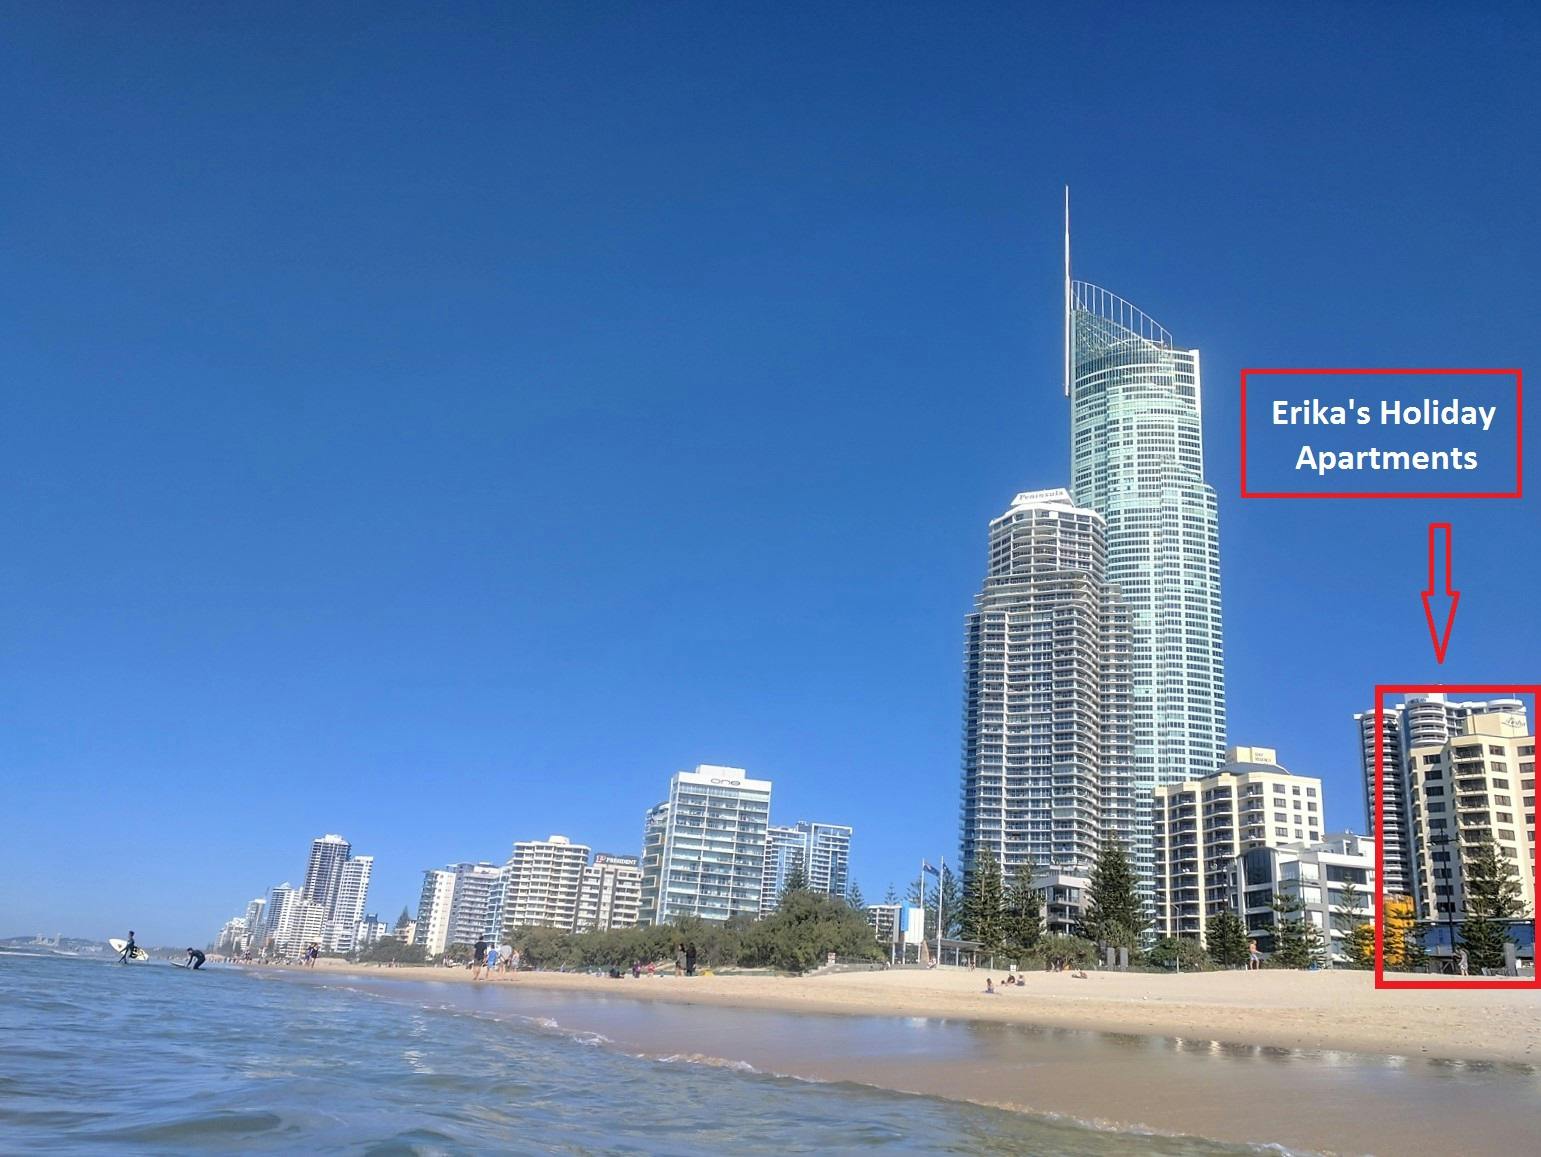 Hotel localization in Surfers Paradise Beach, Gold Coast, Queensland, Australia